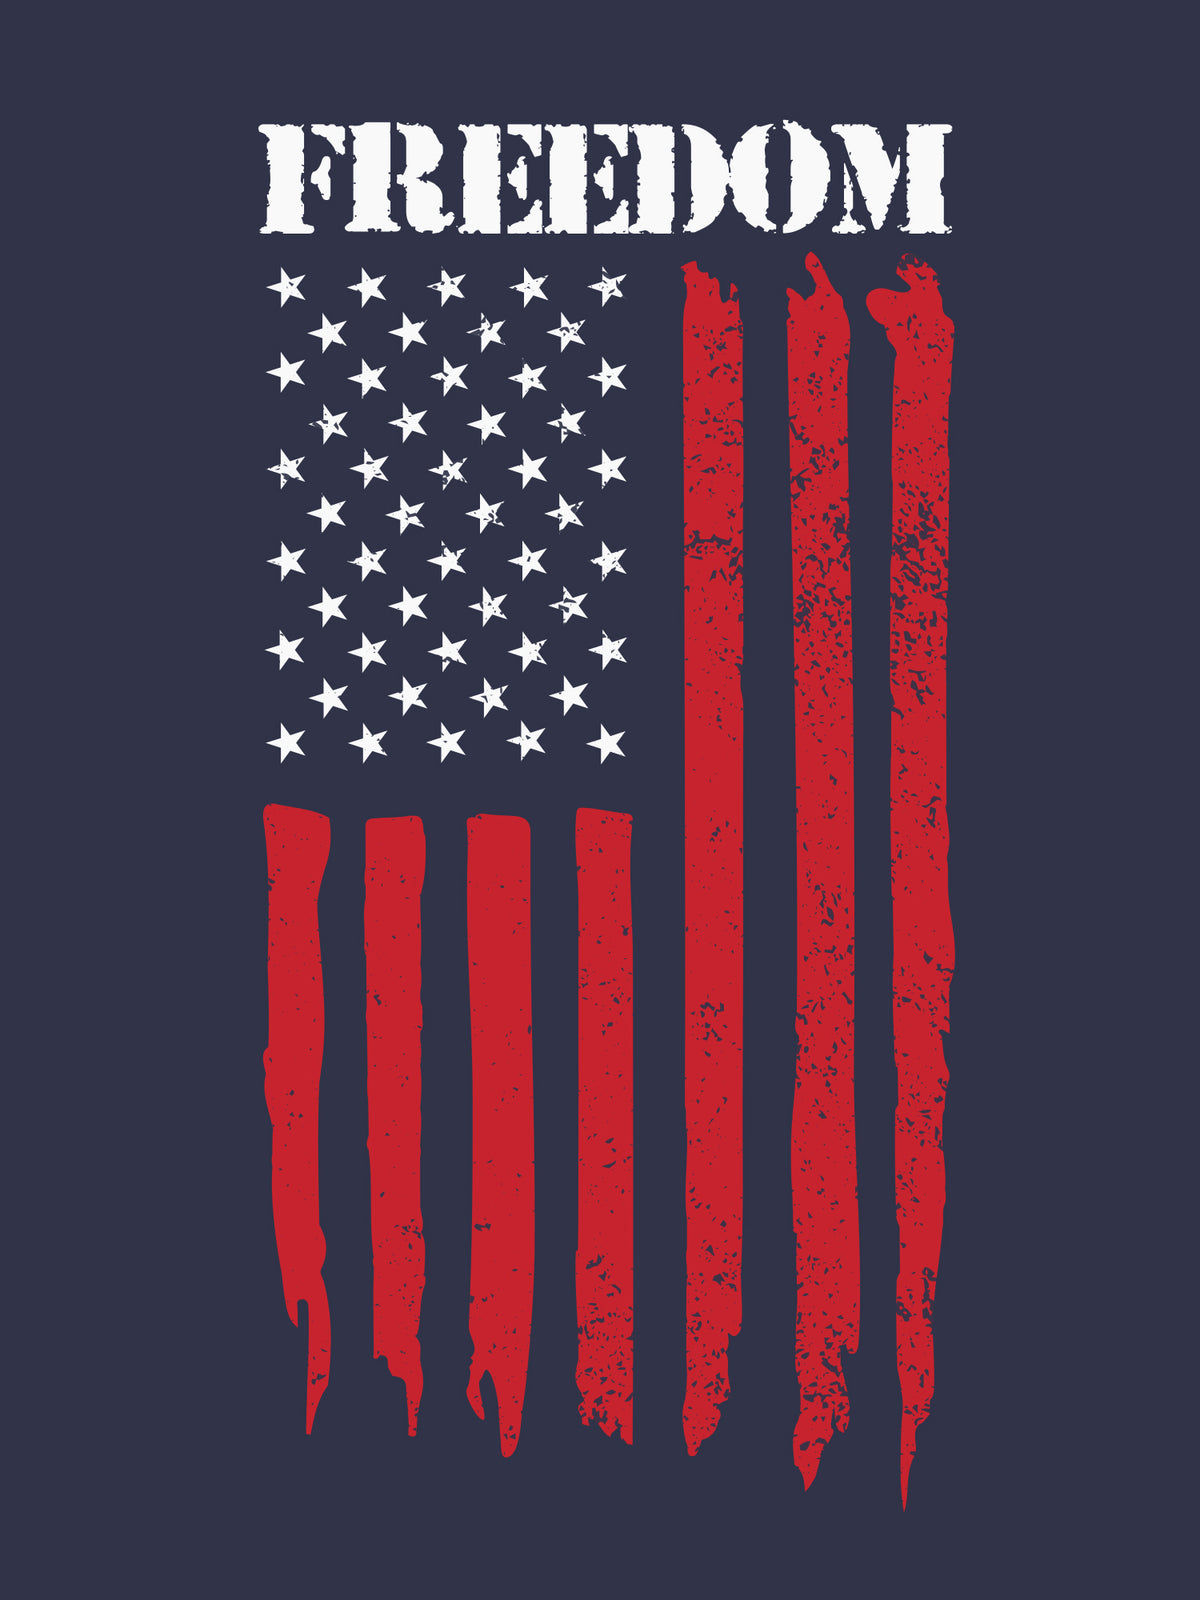 FREEDOM Mens Crewneck T-Shirt